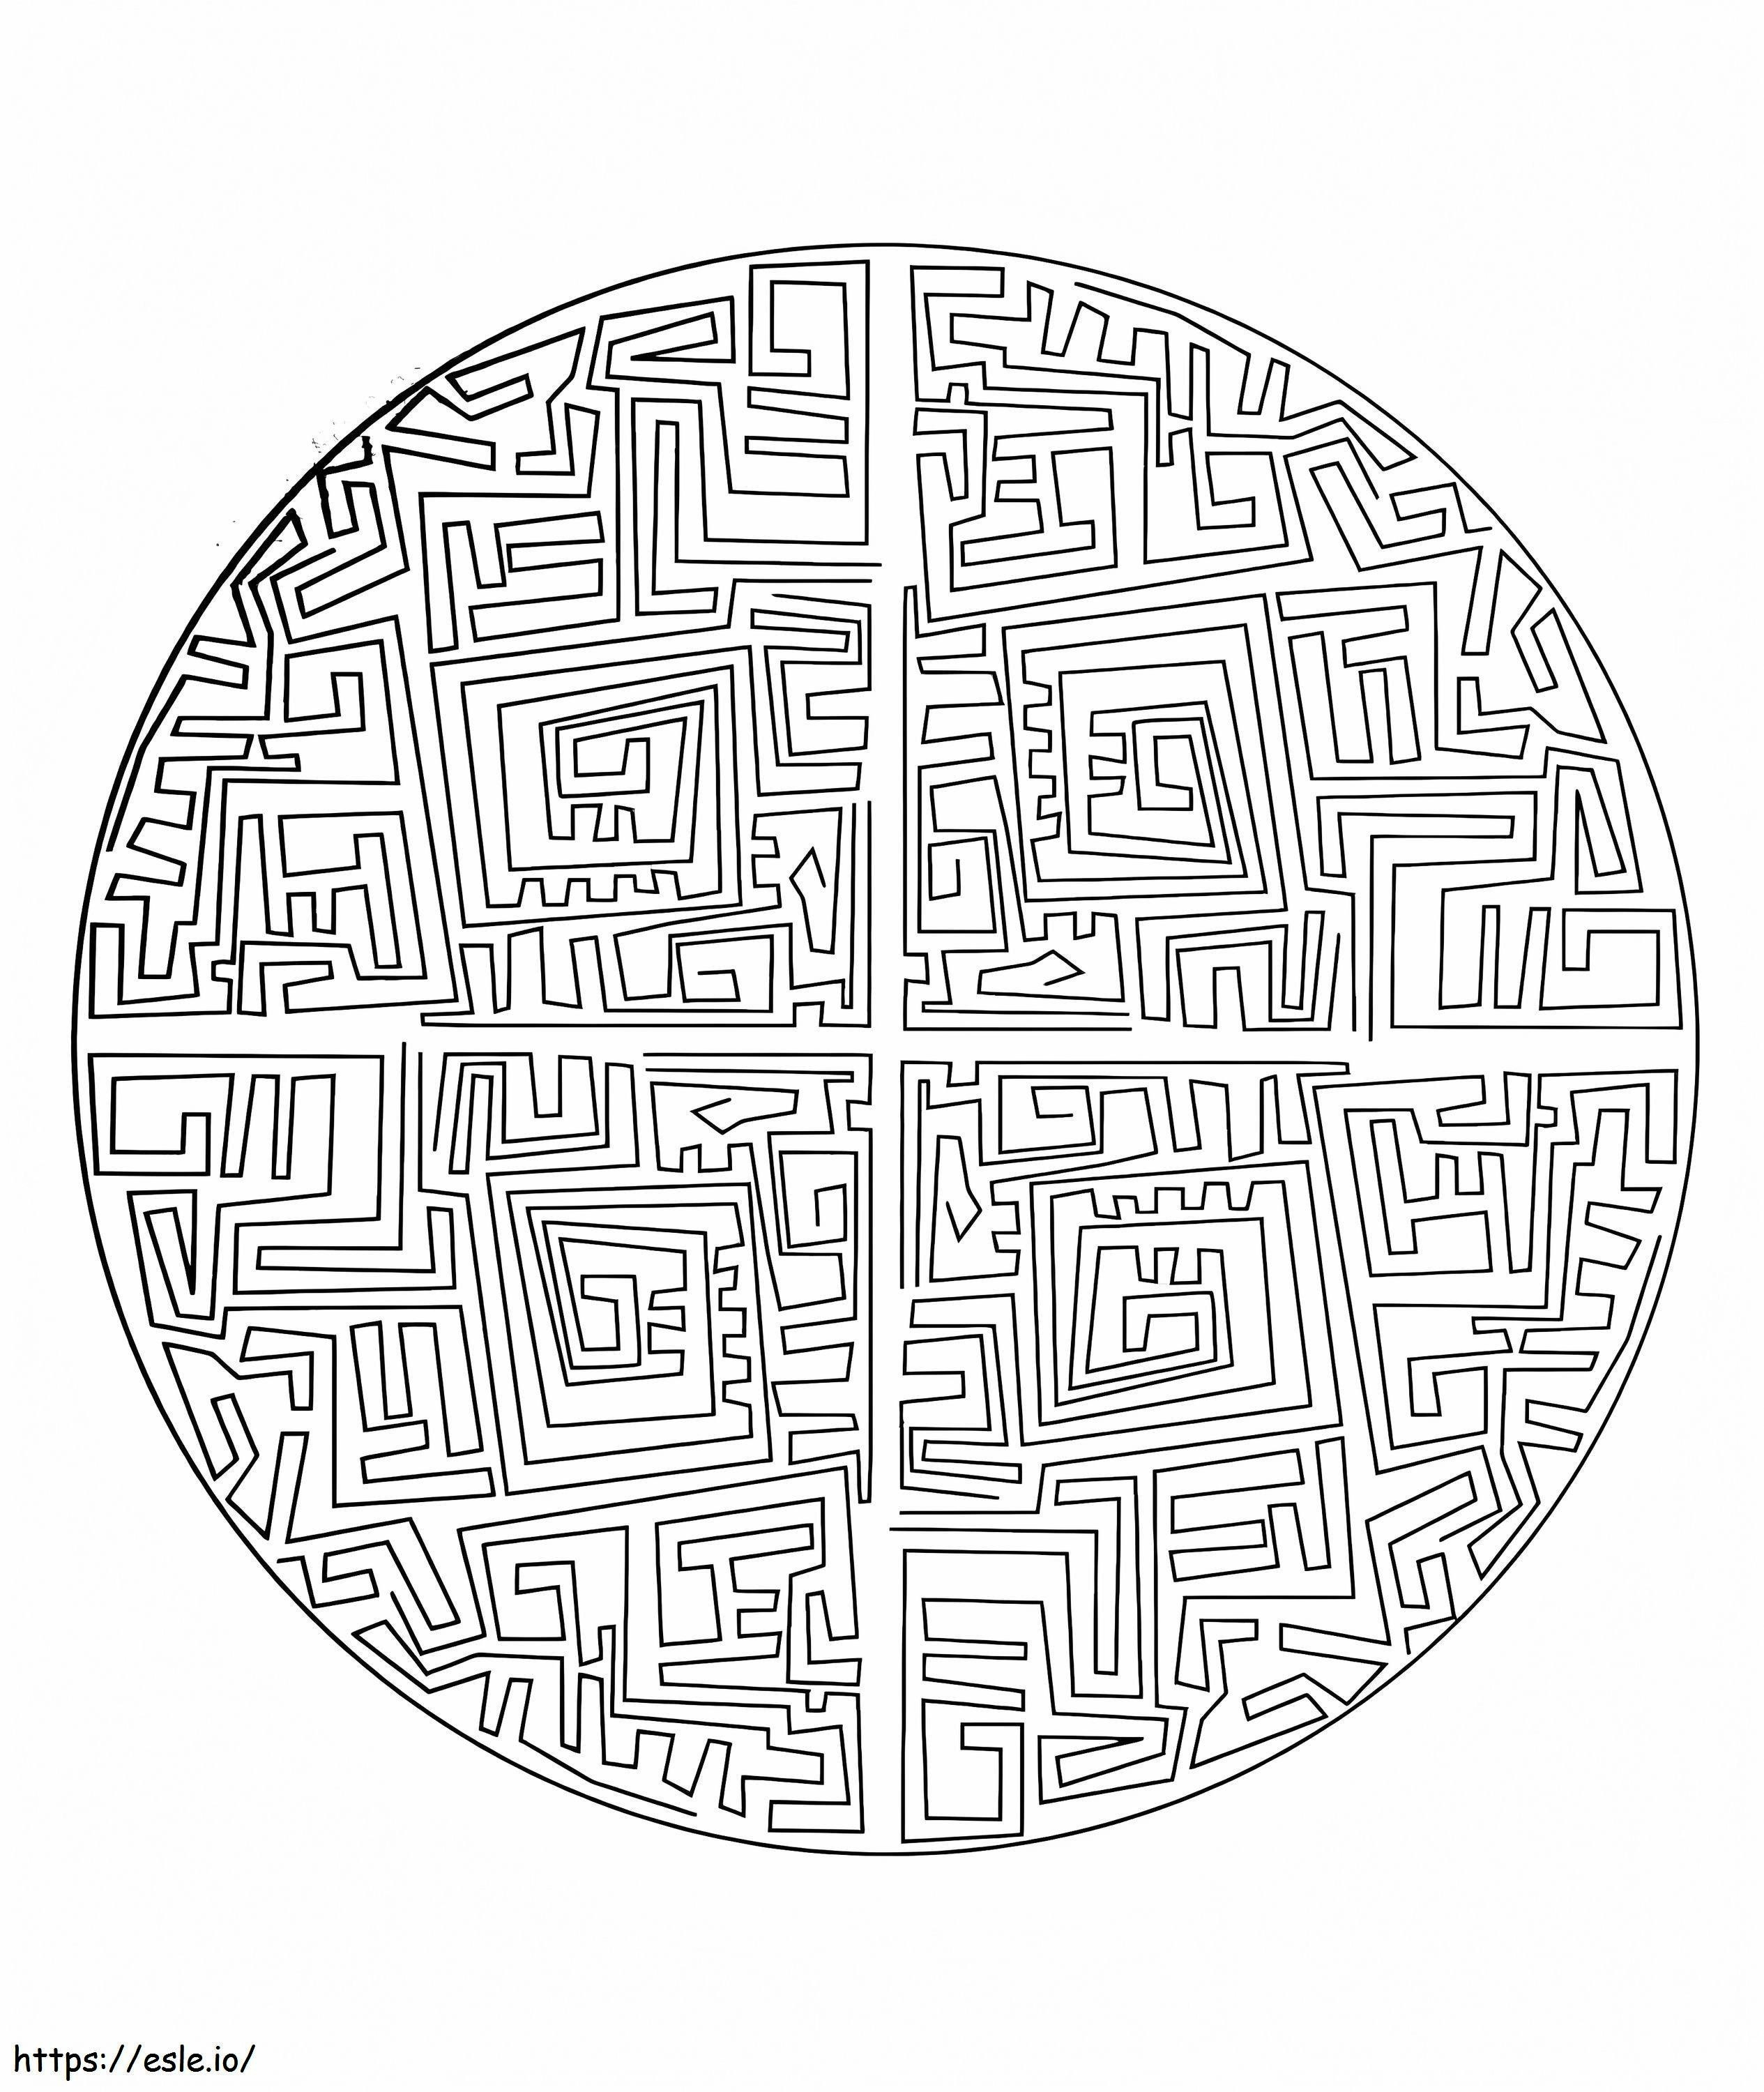 Circle Maze coloring page